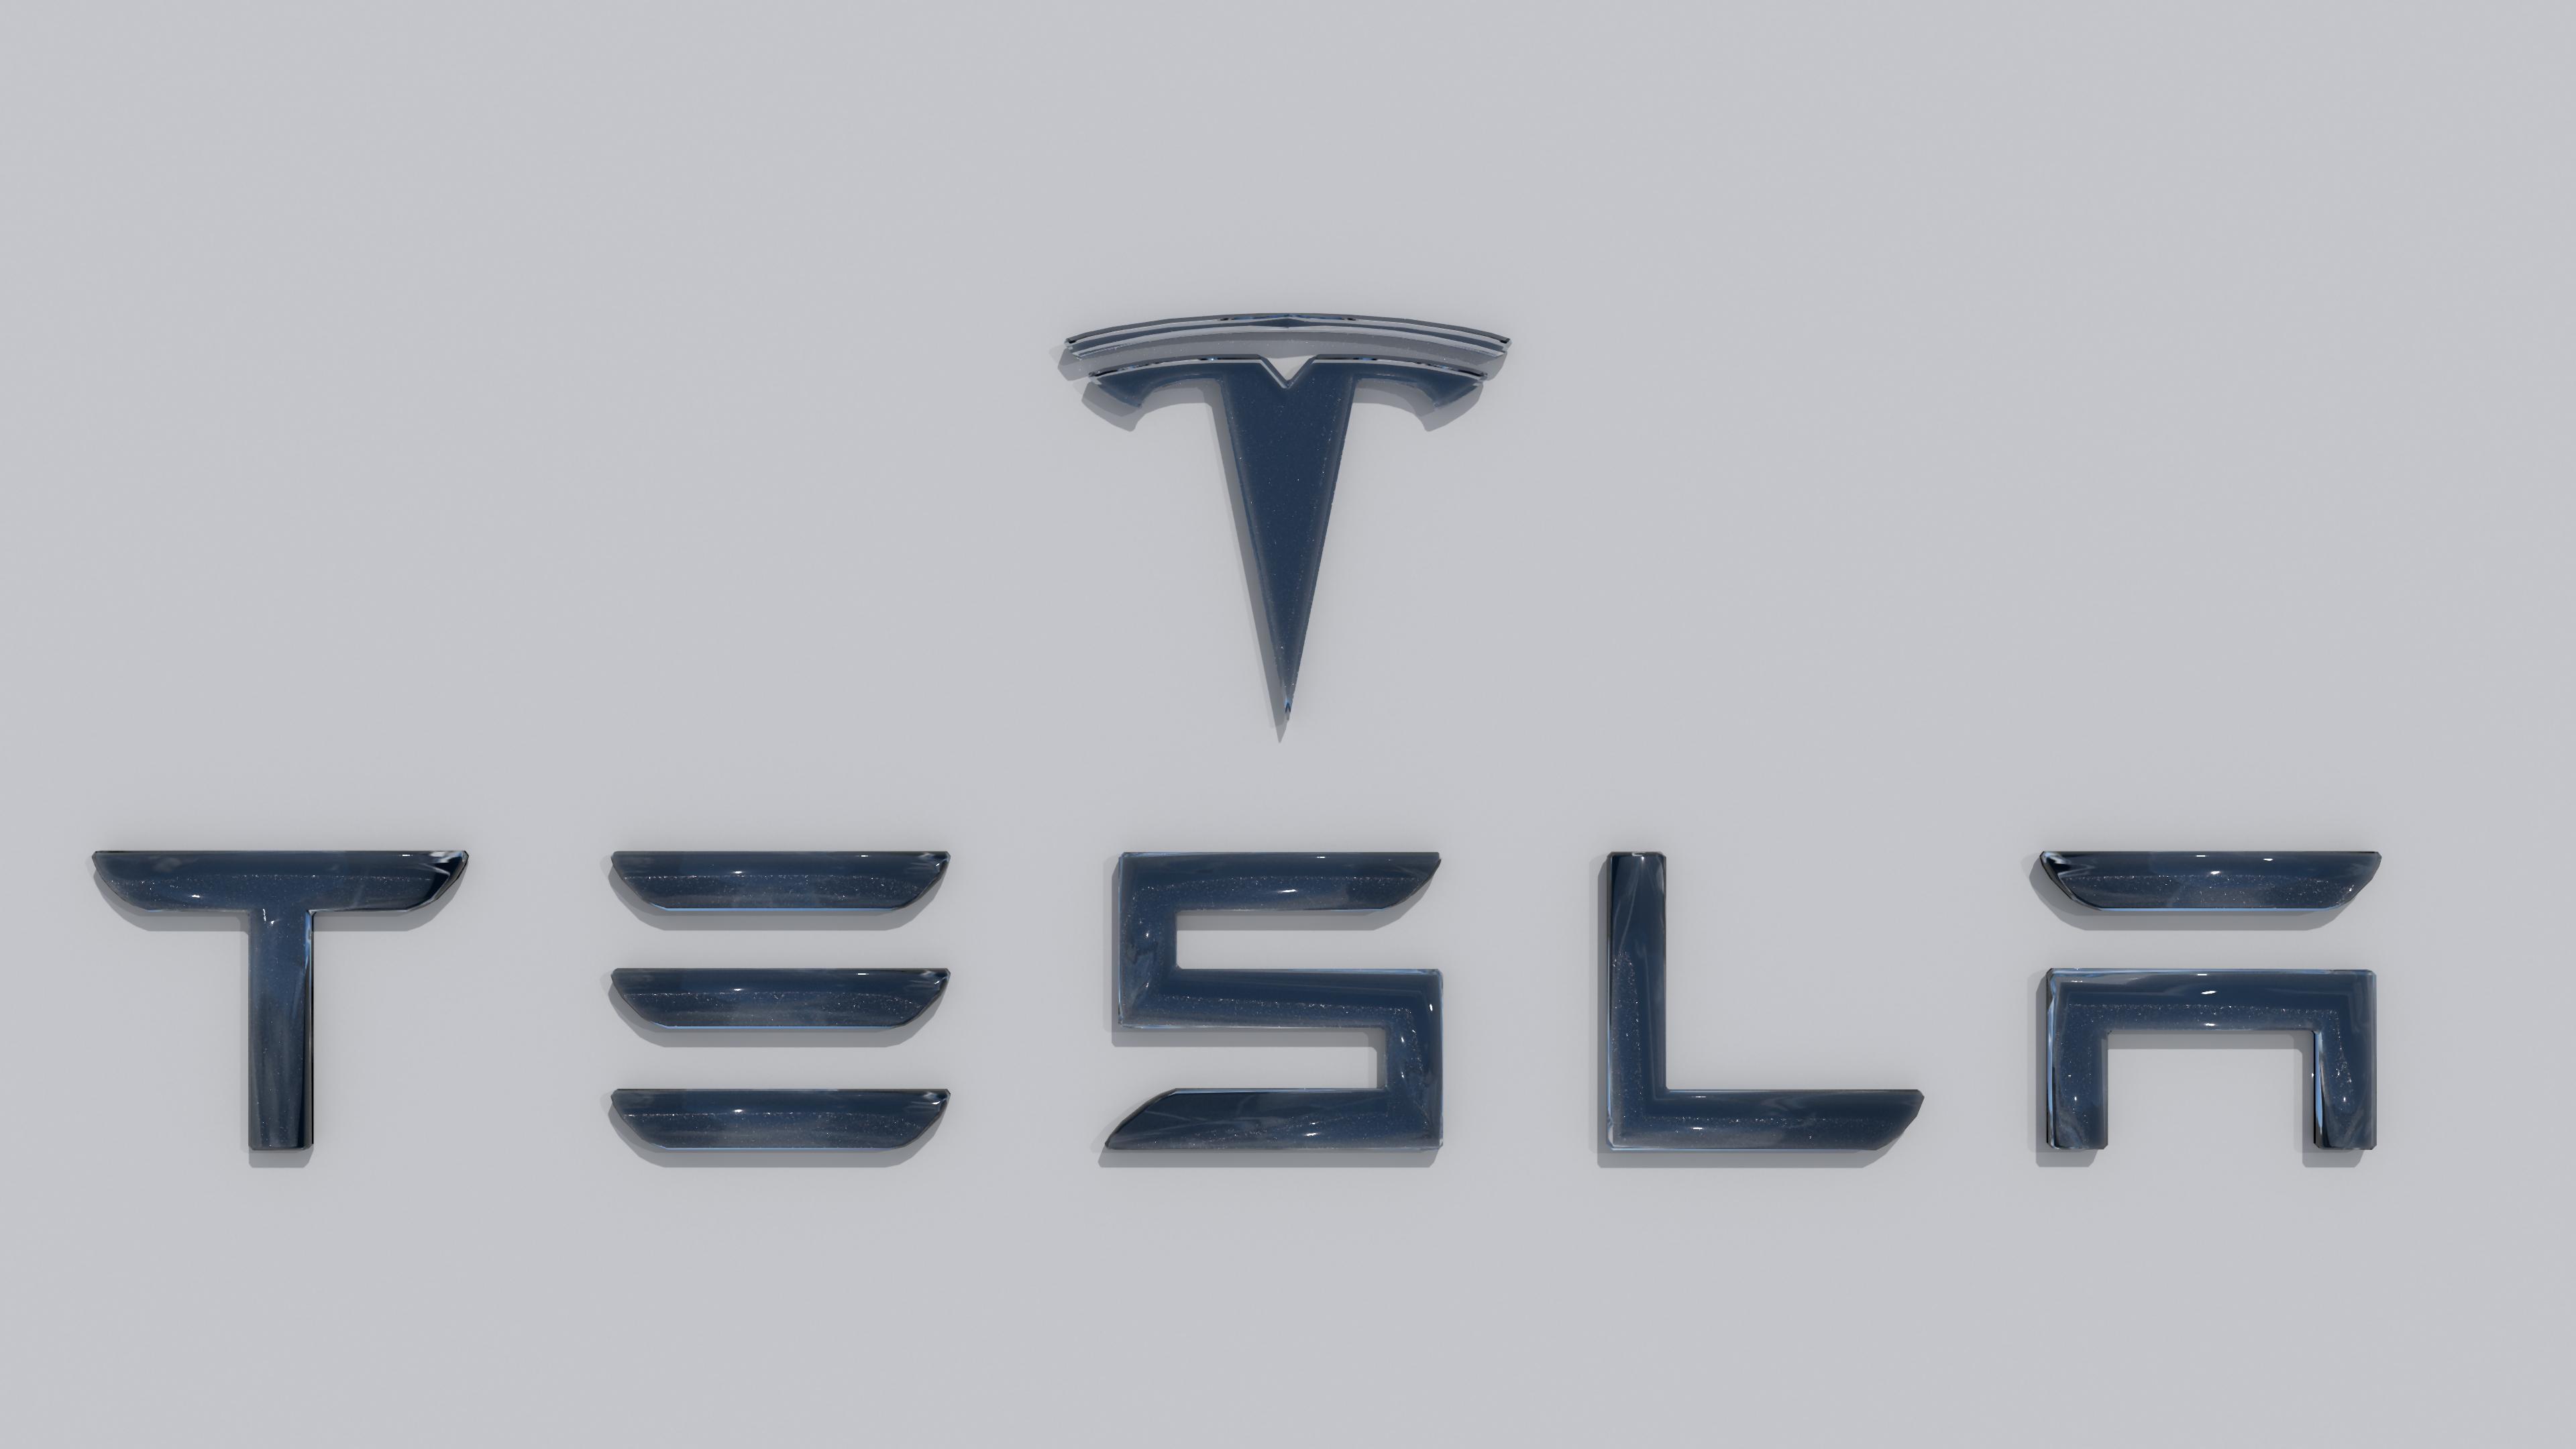 Download Tesla Logo iPhone Images In 4K Download Wallpaper  GetWallsio